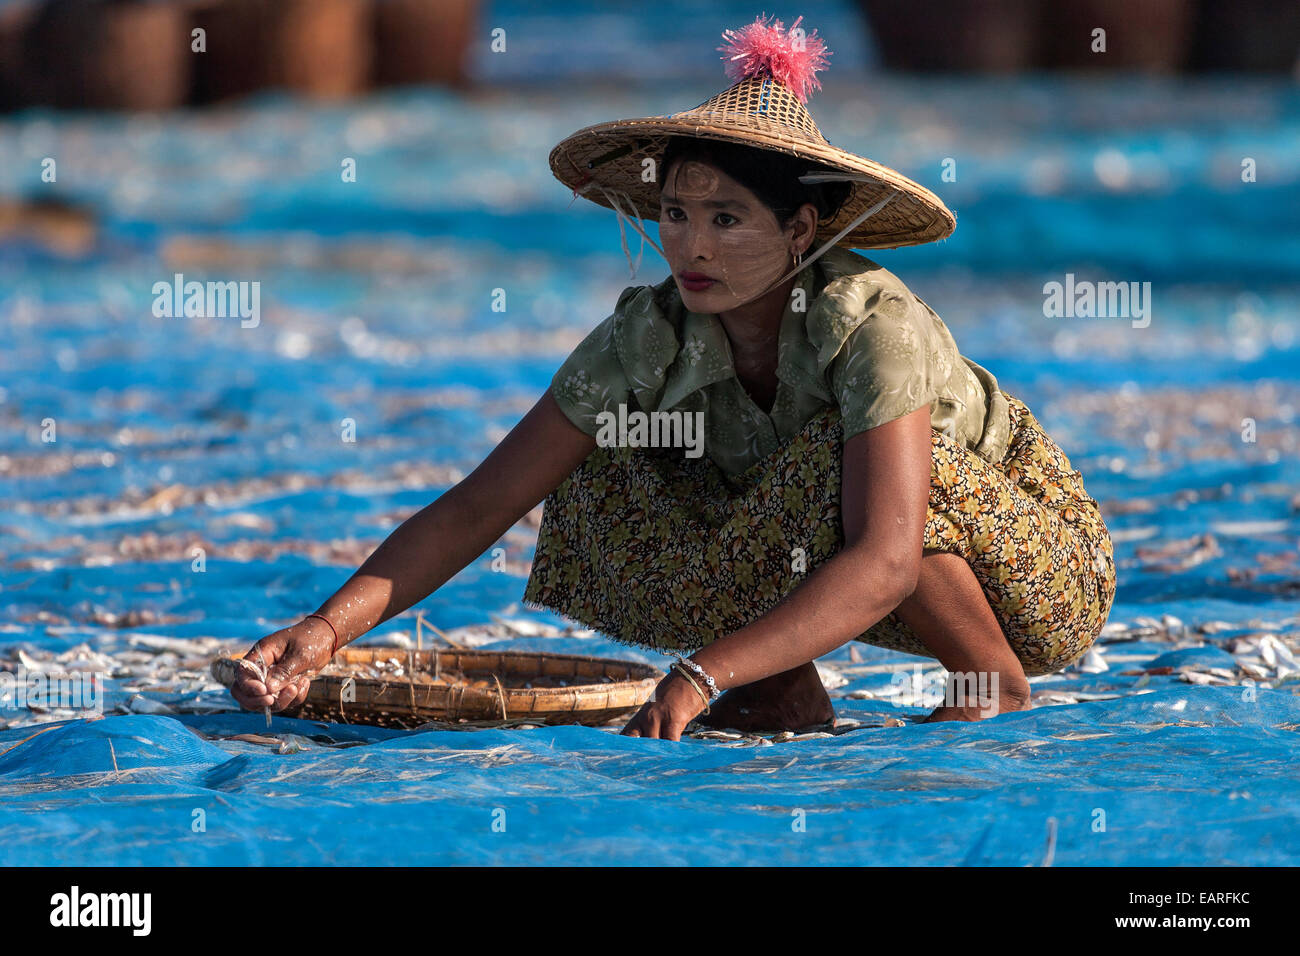 https://c8.alamy.com/comp/EARFKC/burmese-woman-with-straw-hat-and-thanaka-paste-in-the-face-collecting-EARFKC.jpg